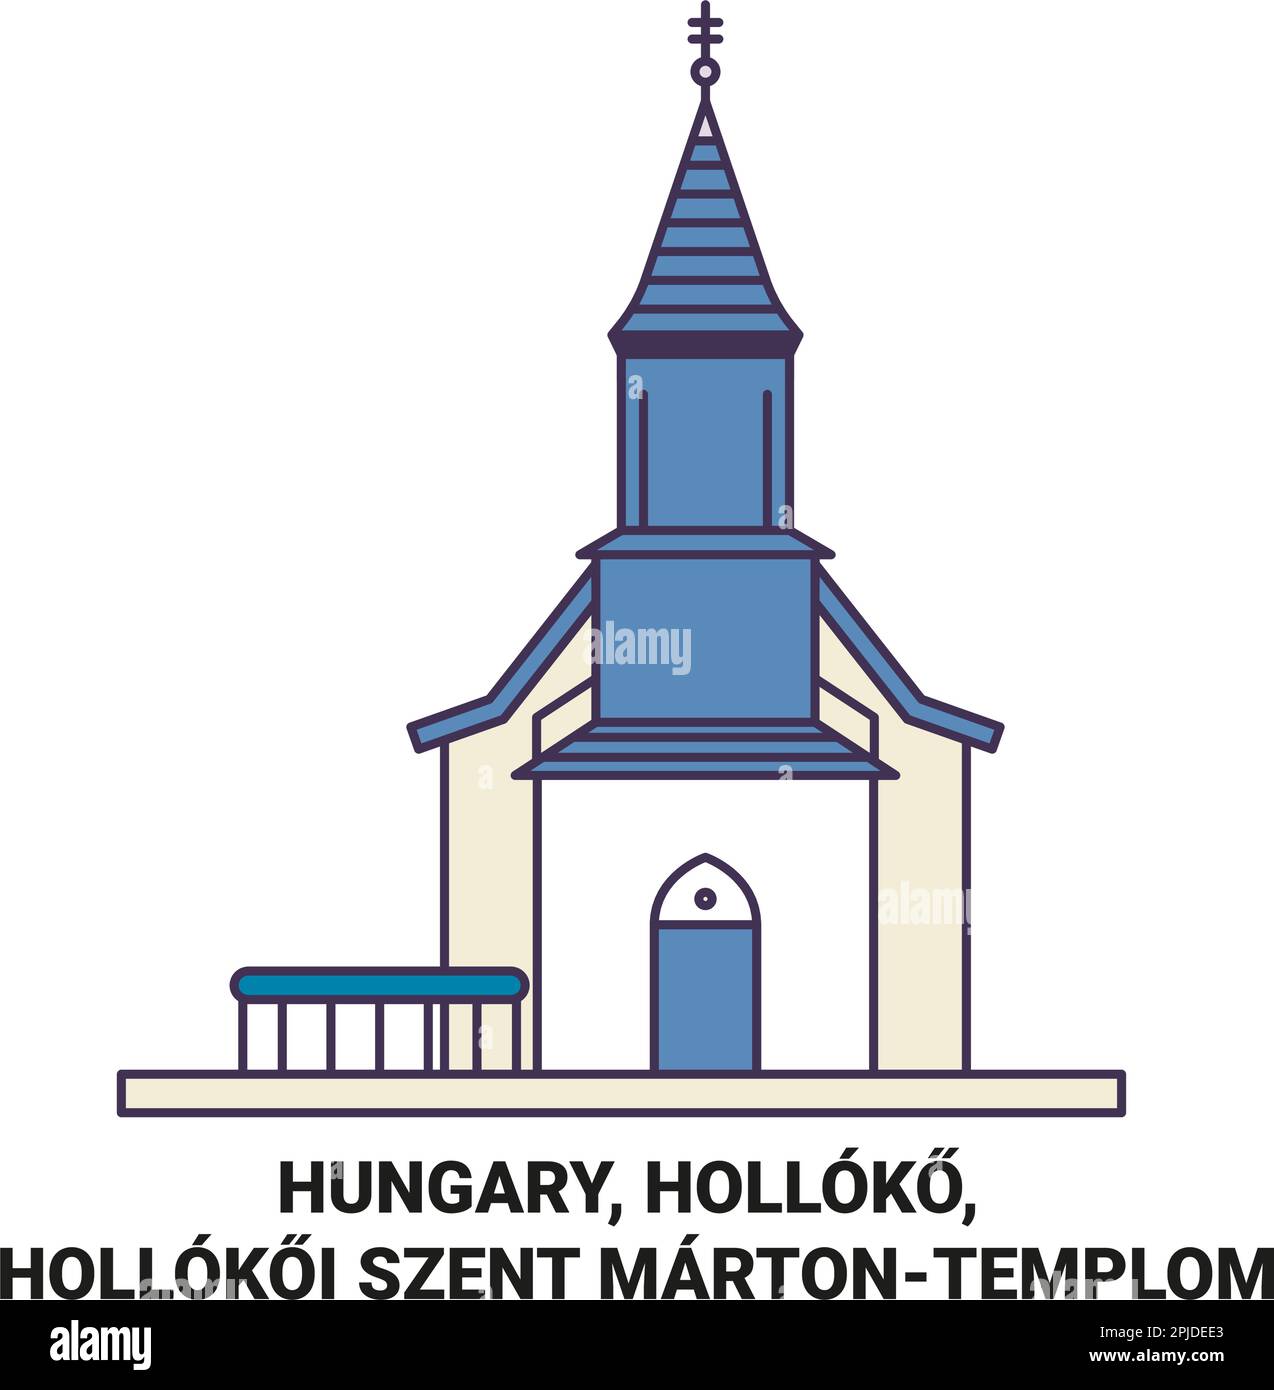 Hungary, Holloko, Hollokoi Szent Martontemplom travel landmark vector illustration Stock Vector